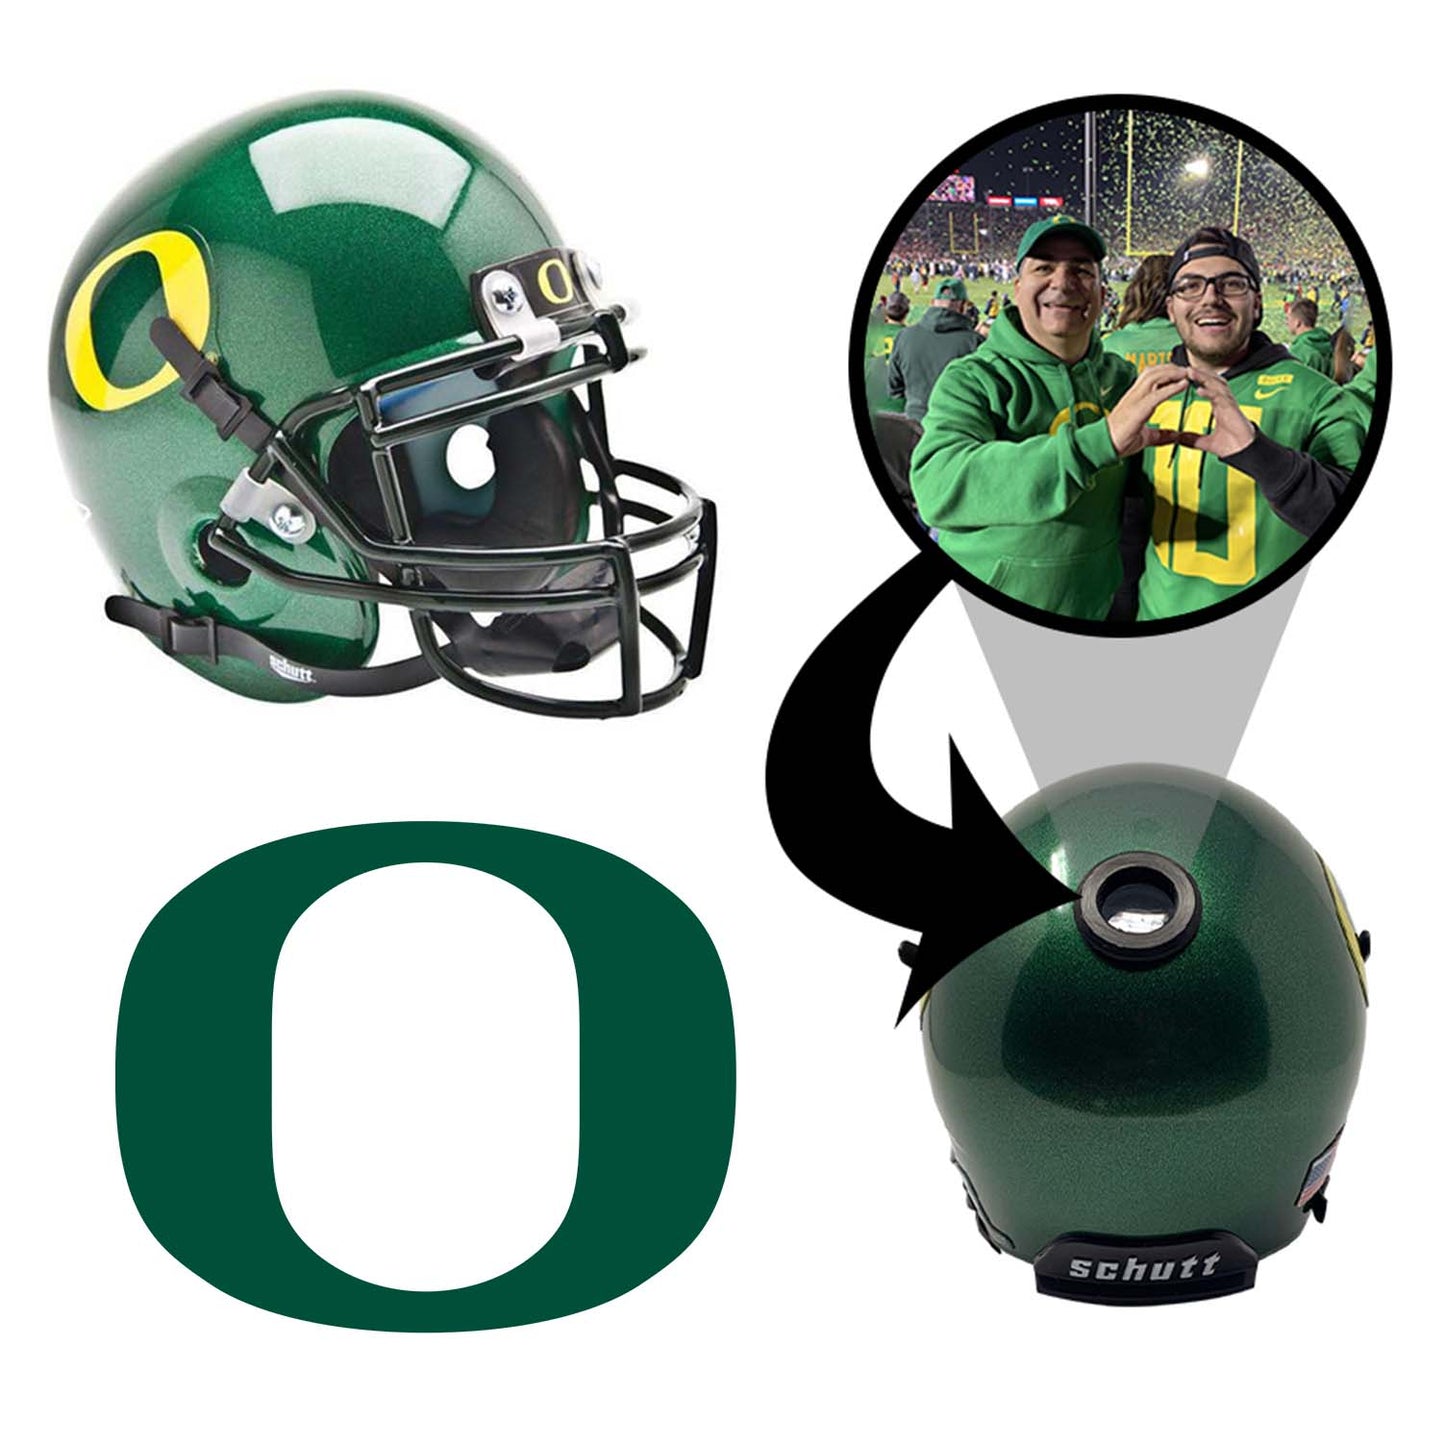 Oregon Ducks College Football Collectible Schutt Mini Helmet - Picture Inside - FANZ Collectibles